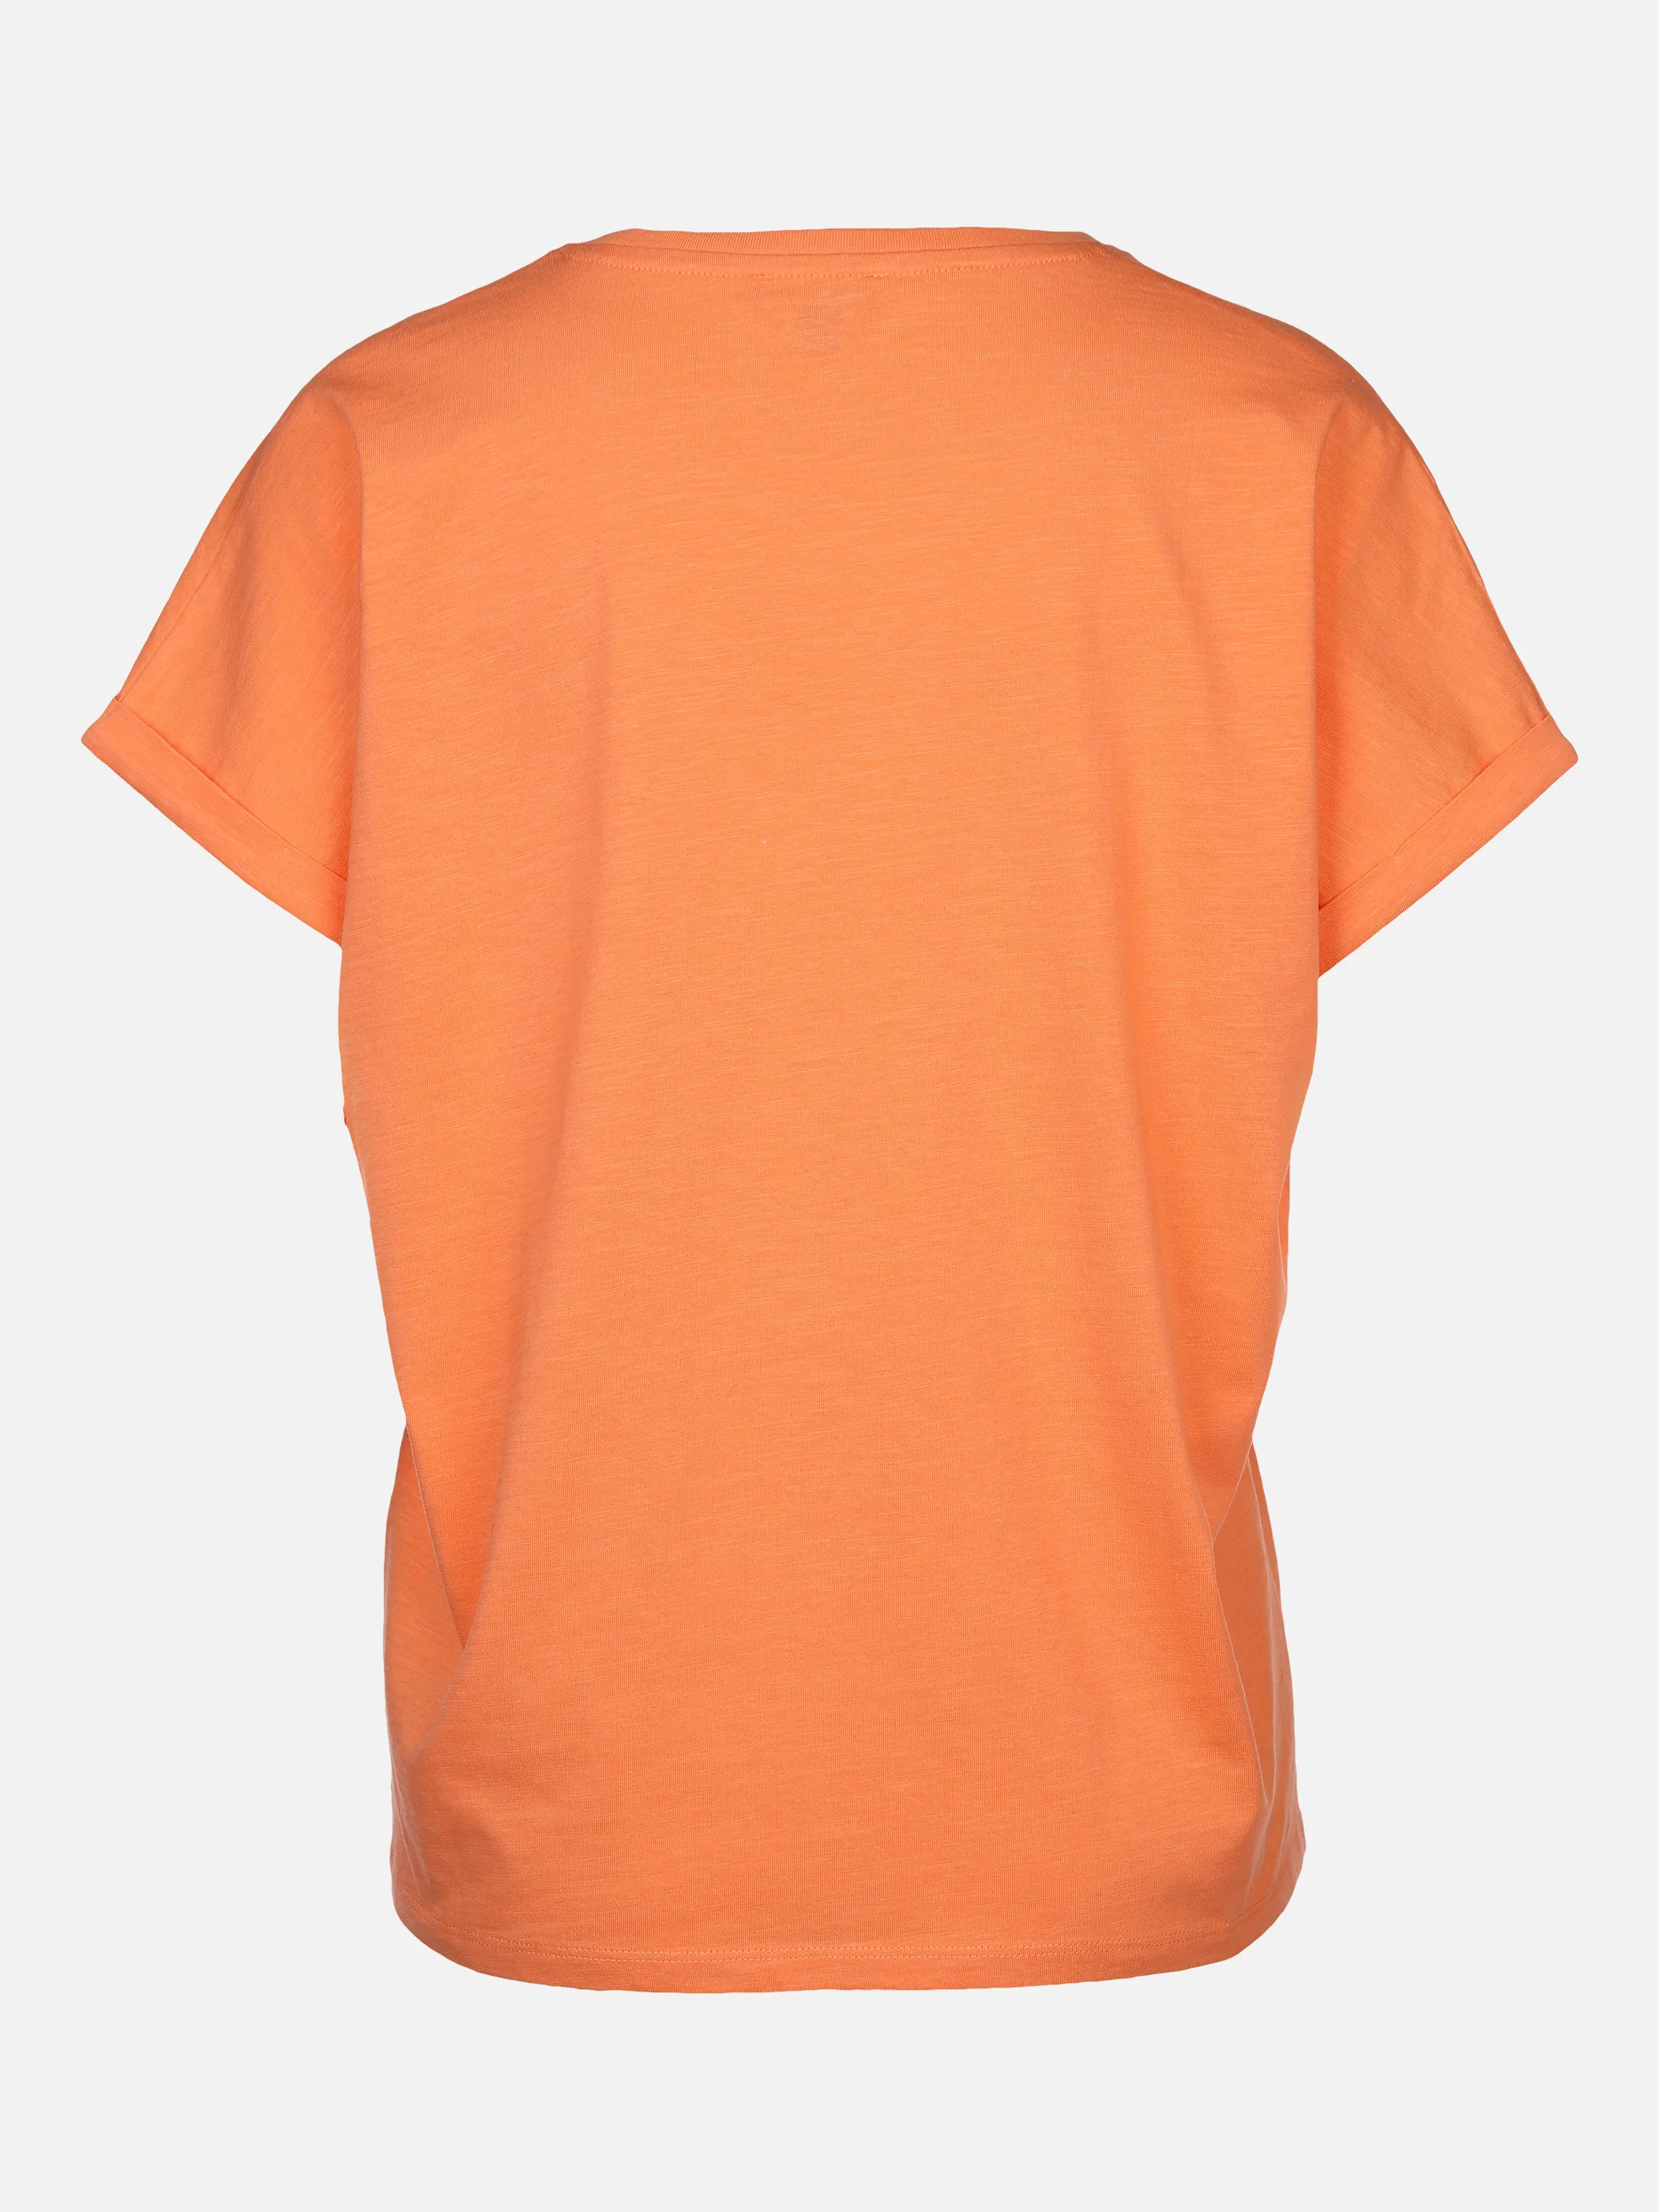 Sure Da-T-Shirt m. Frontartwork Orange 873372 MELONE 2